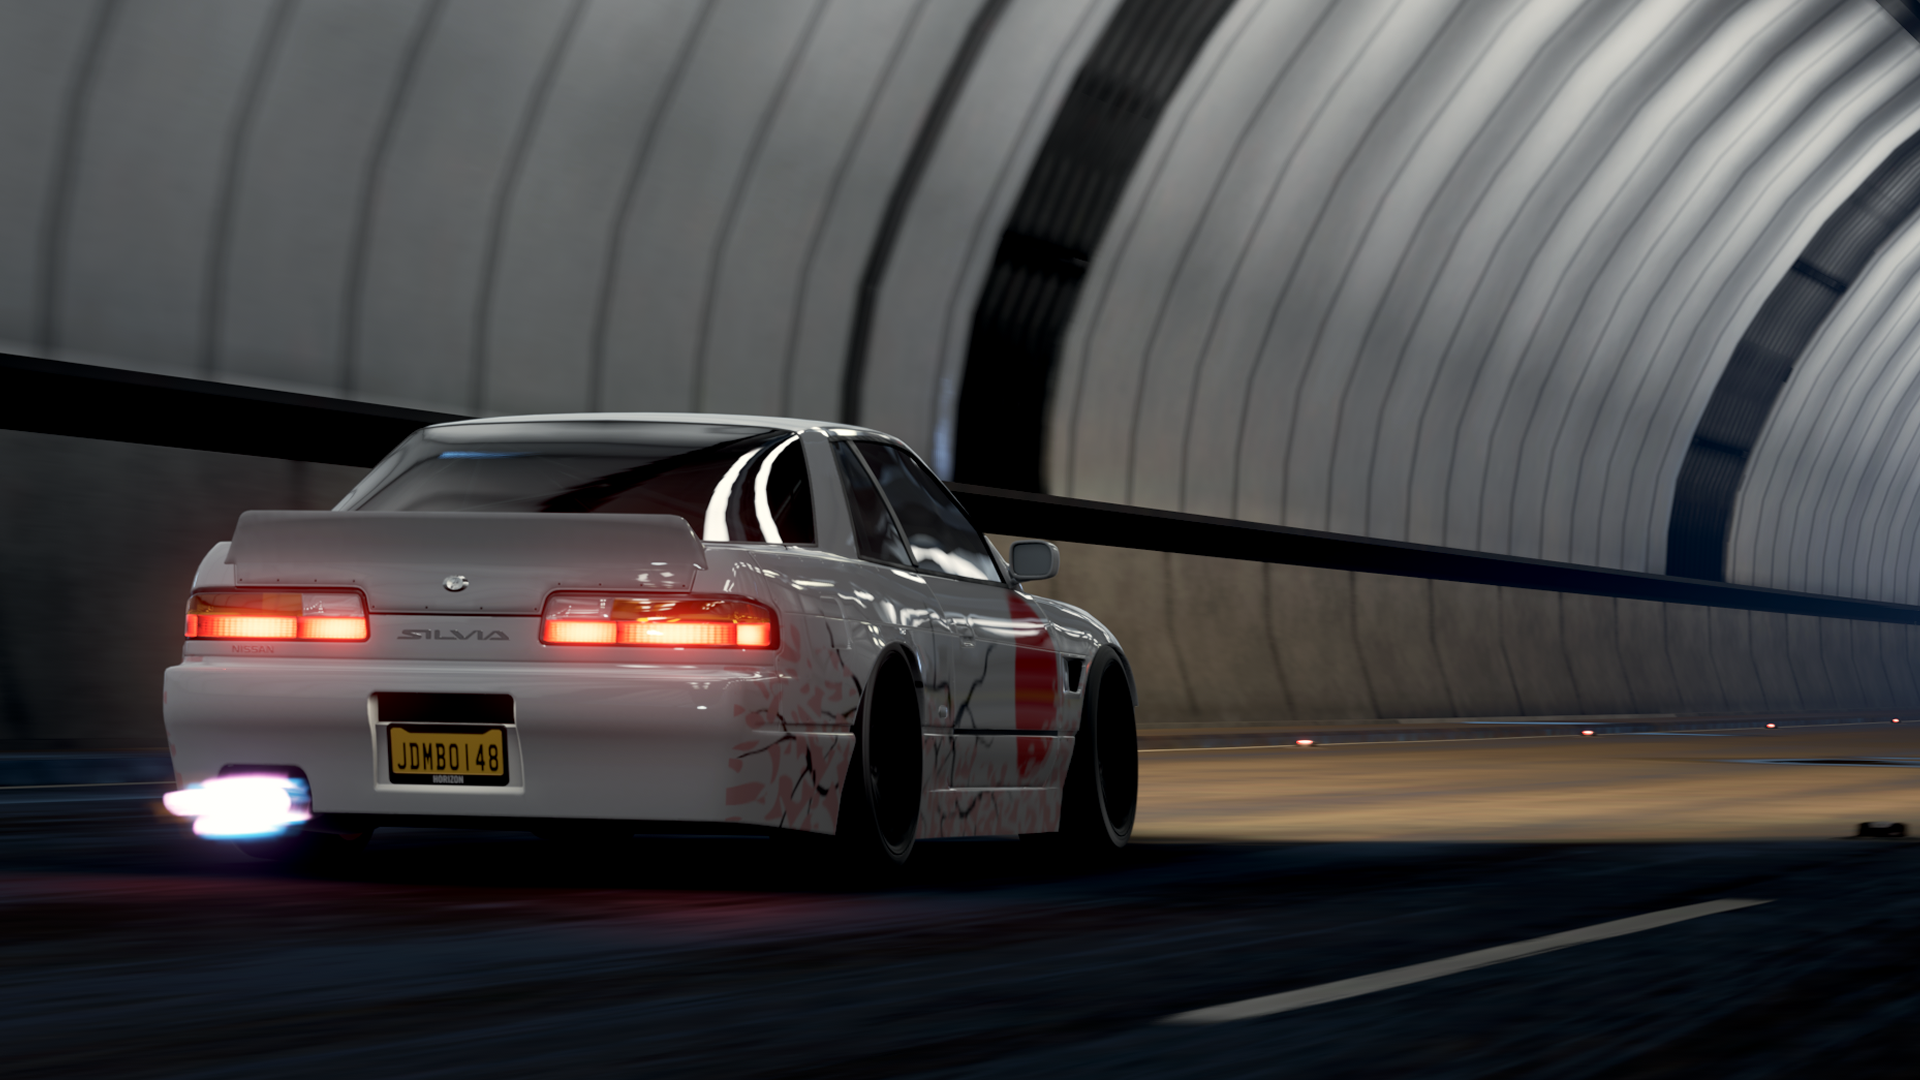 Forza Horizon 4 Nissan Silvia S13 Japanese Cars Video Games 19x1080 Wallpaper Wallhaven Cc